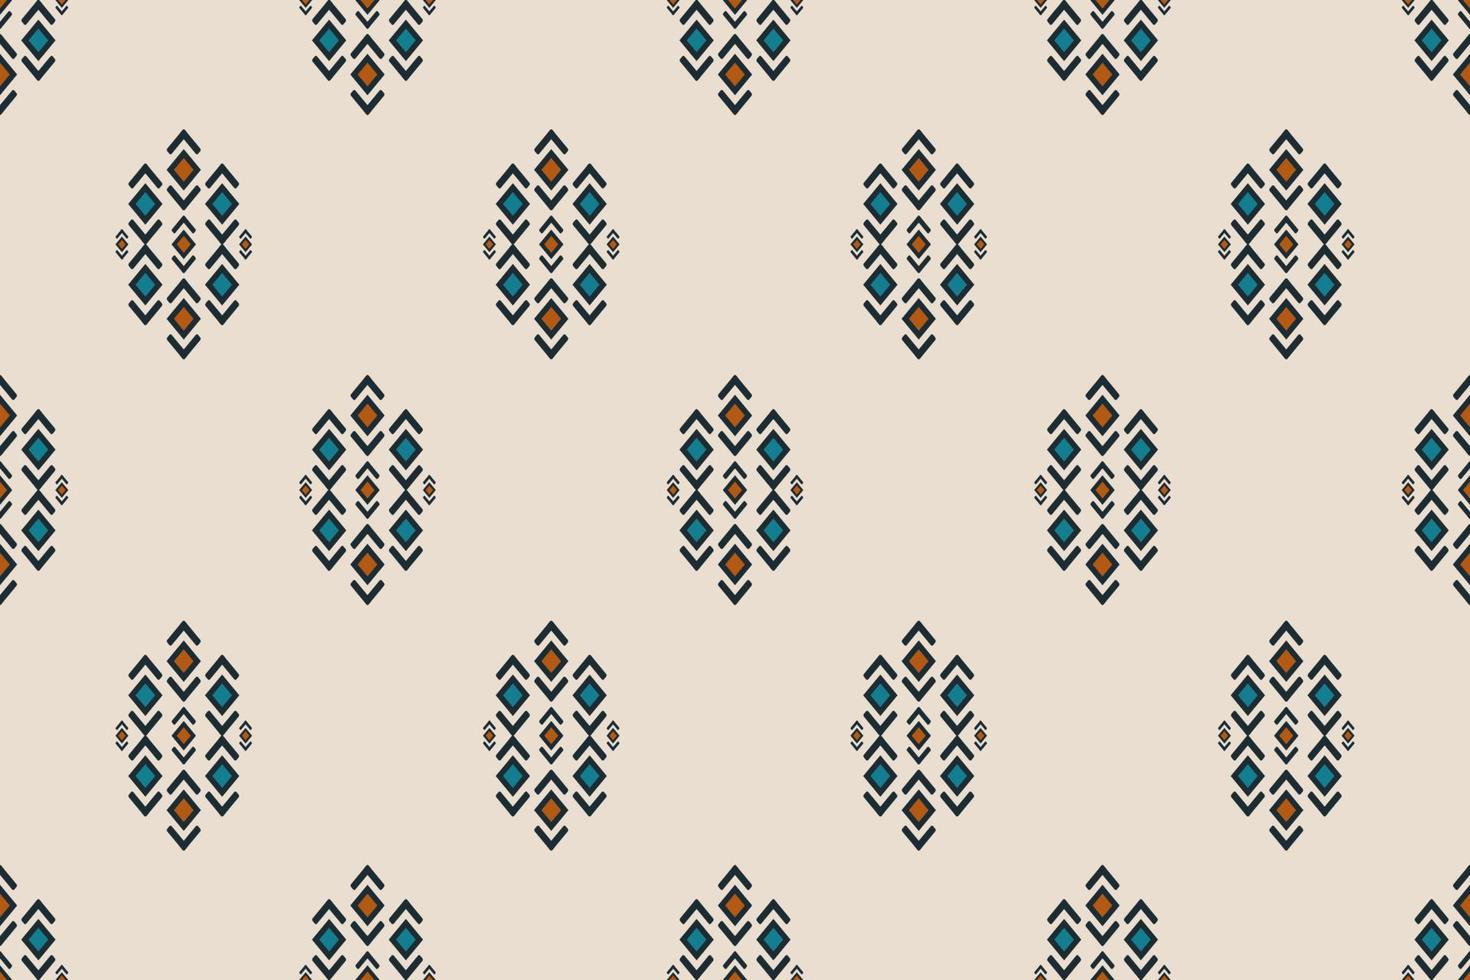 geometrisk etnisk orientalisk sömlös mönster traditionell. tyg indisk stil. design för bakgrund, tapet, vektor illustration, tyg, Kläder, matta, textil, batik, broderi.